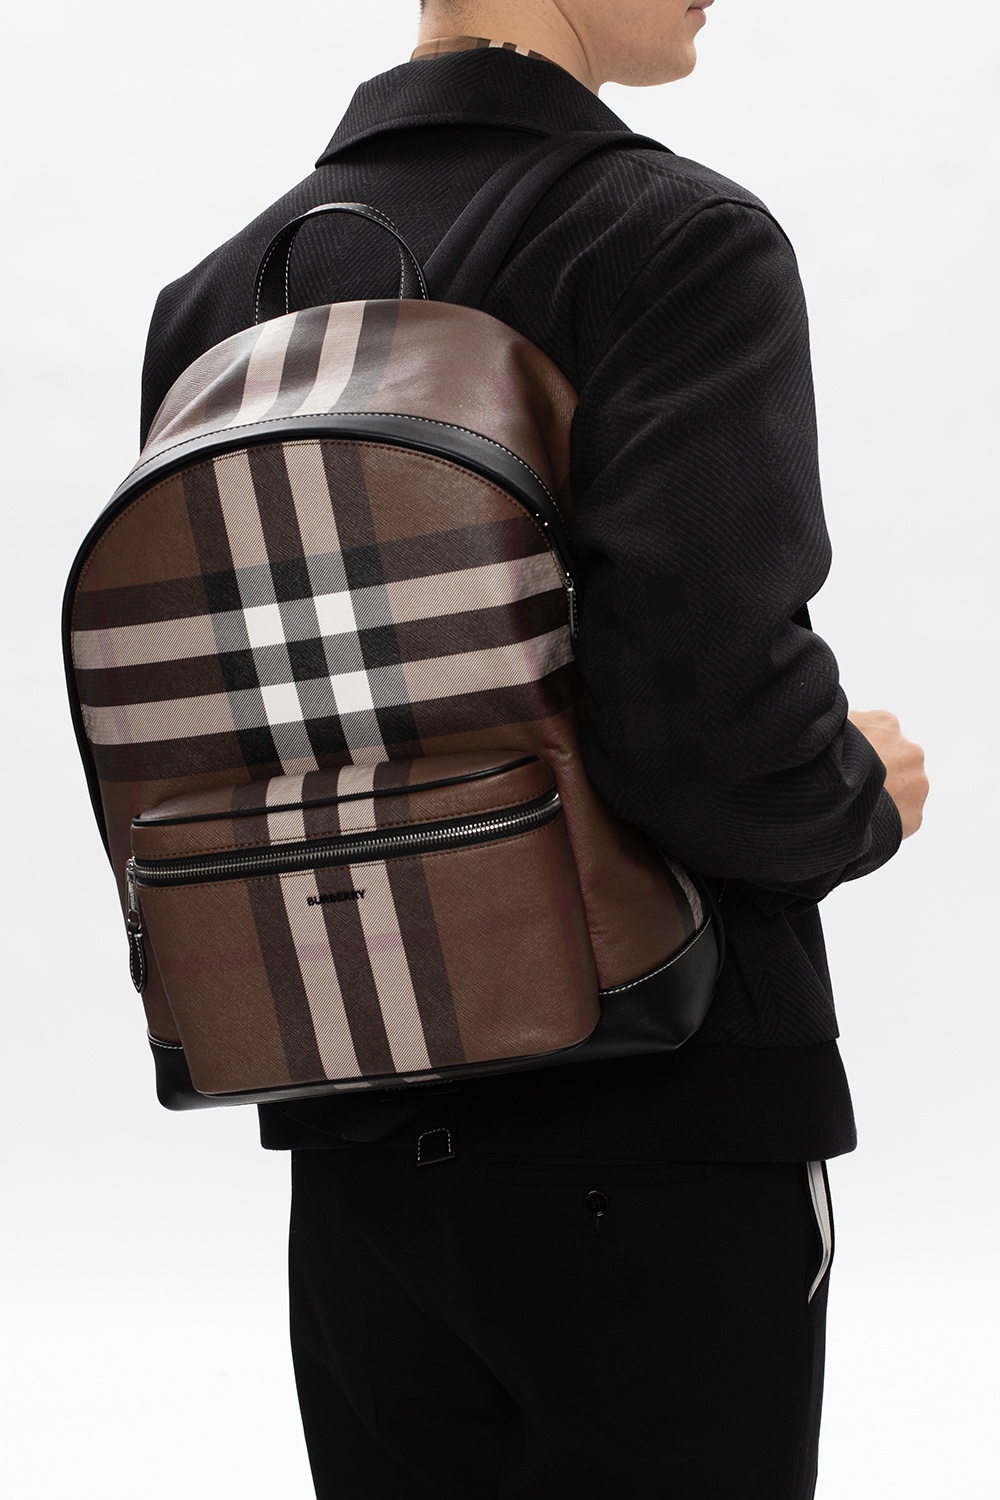 burberry BIRCH Branded backpack